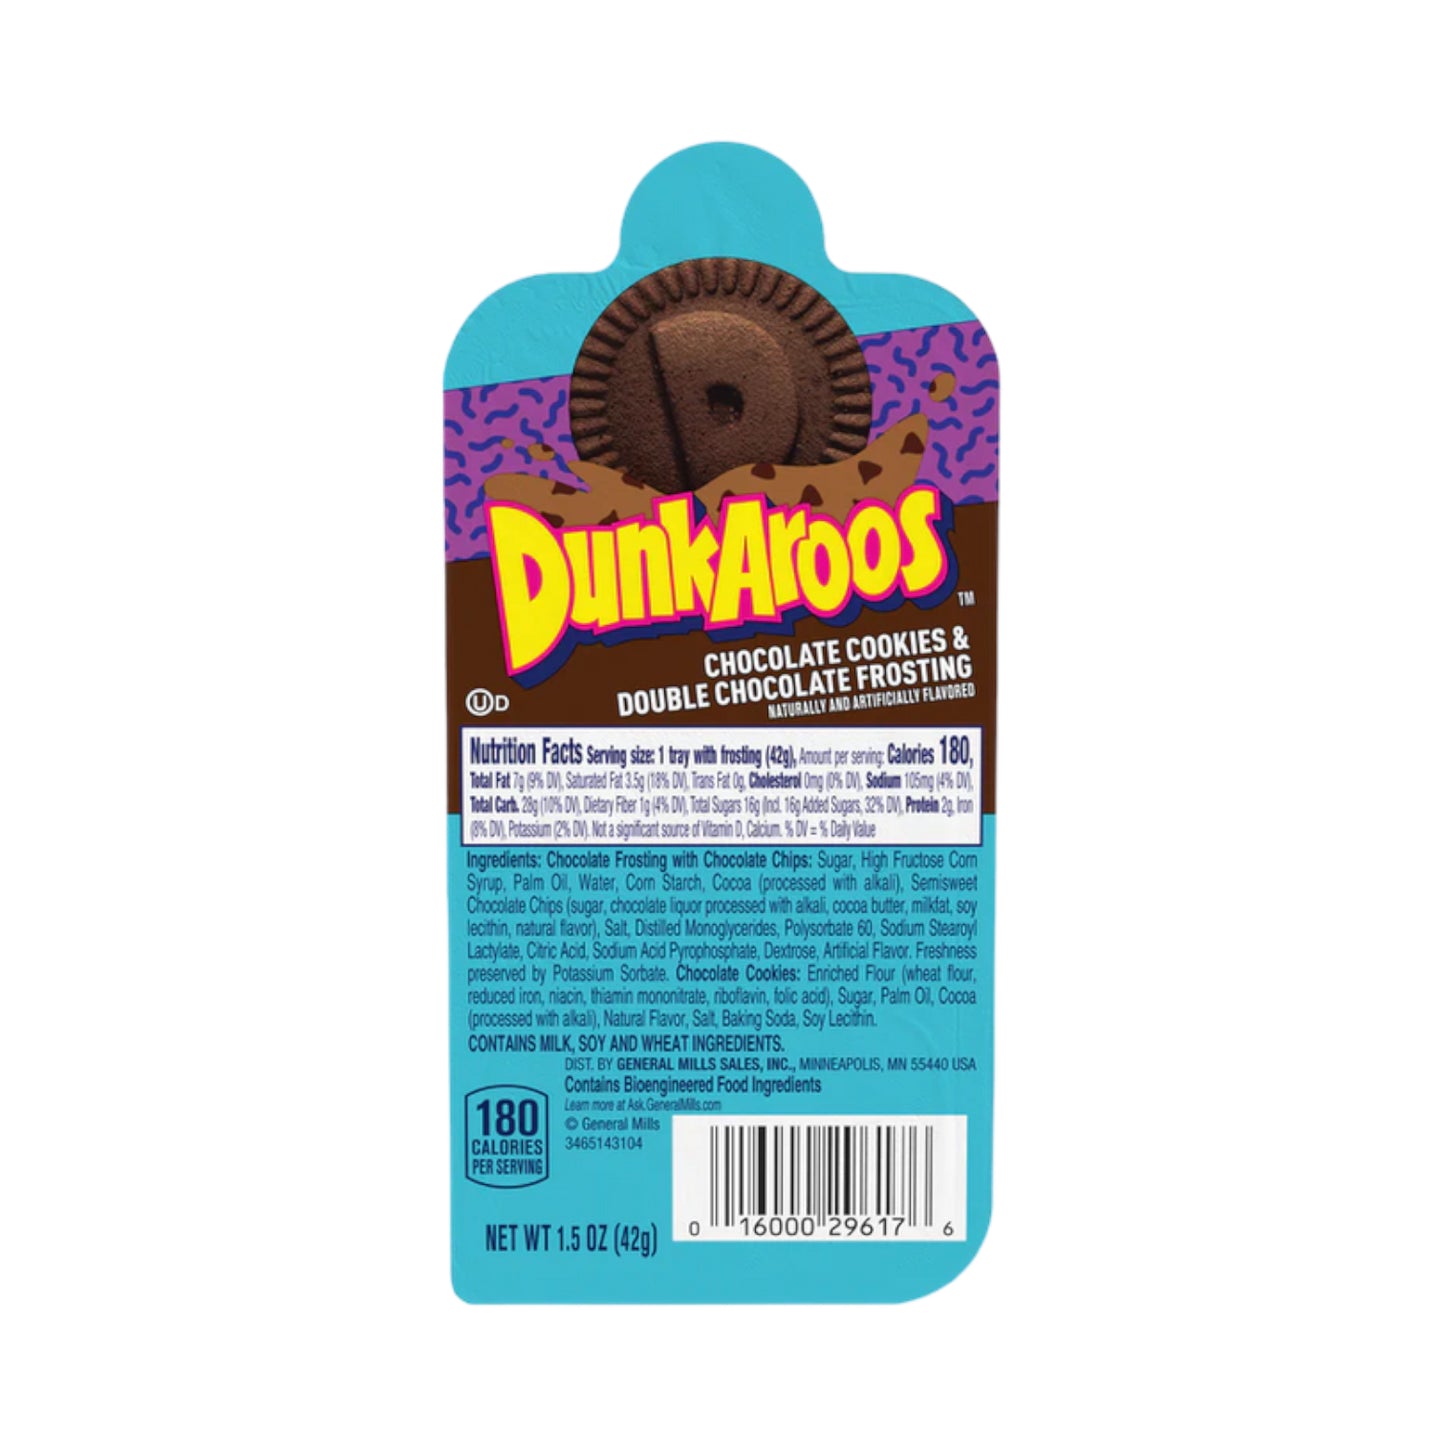 Dunkaroo Chocolate Cookies & Chocolate Frosting - 1.5oz (42g)